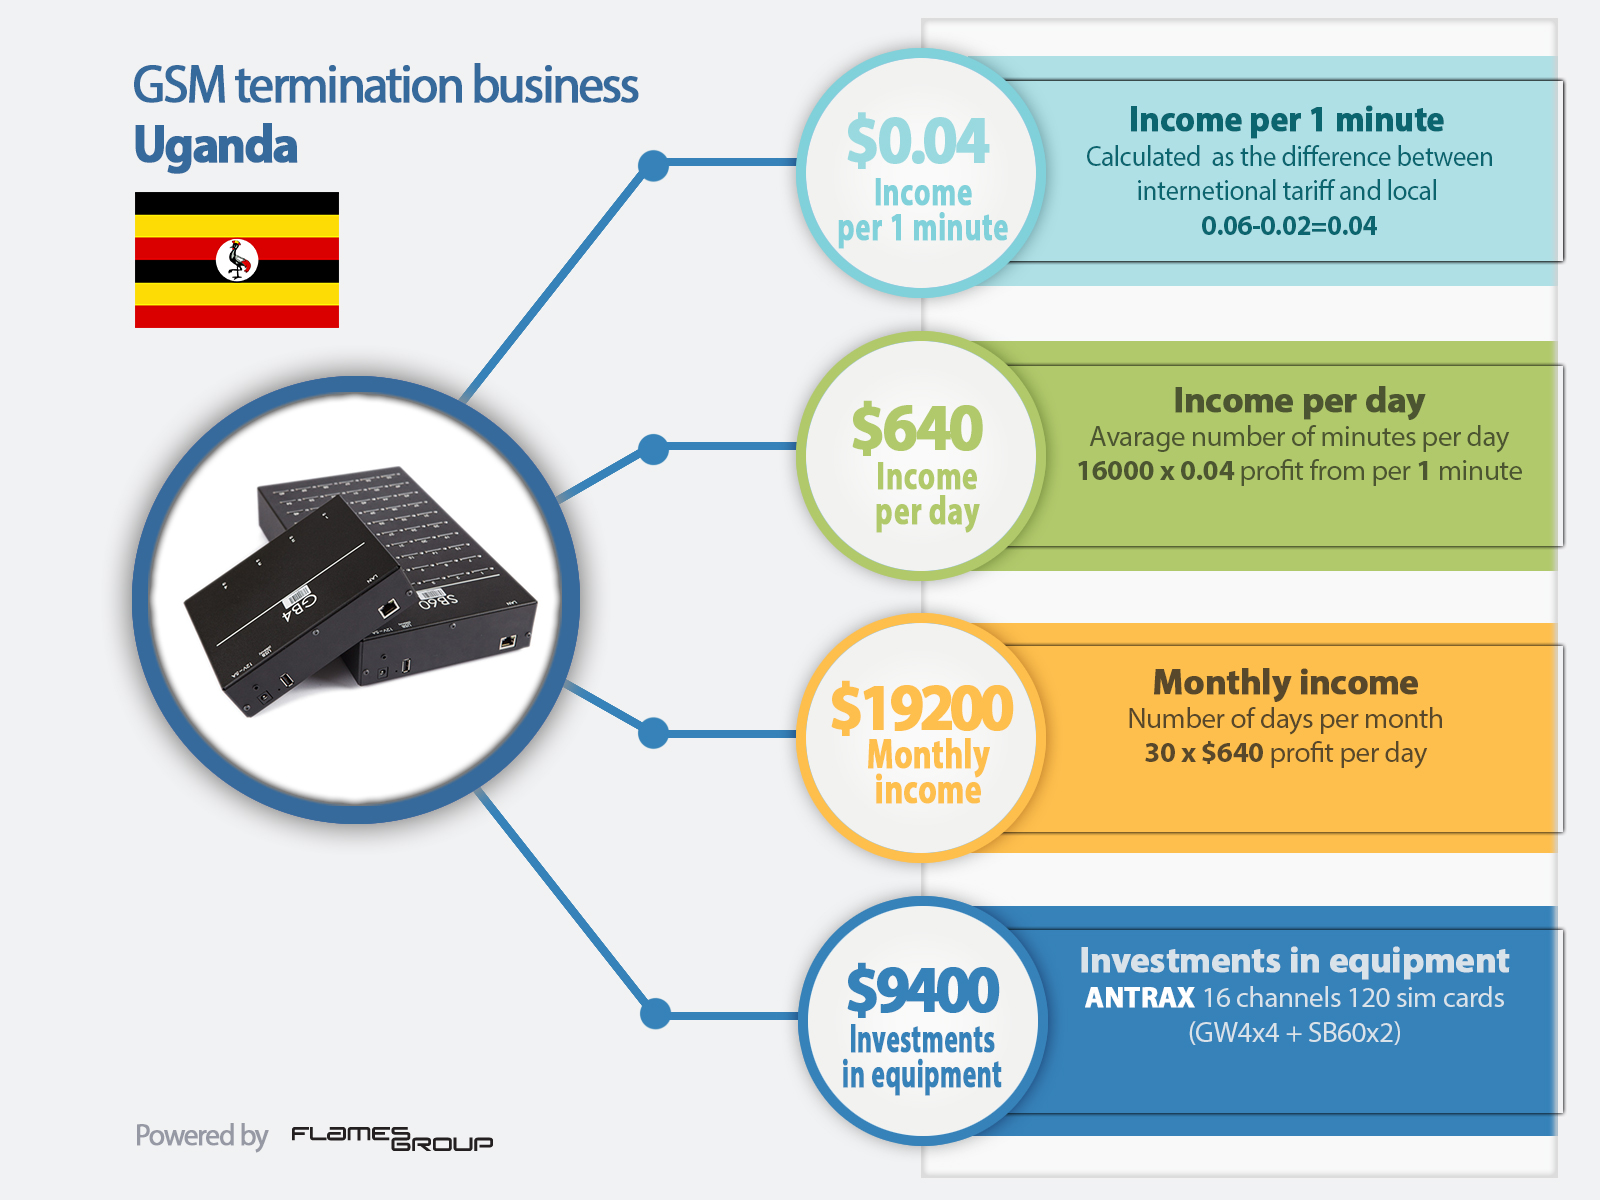 GSM termination in Uganda - Infographic ANTRAX